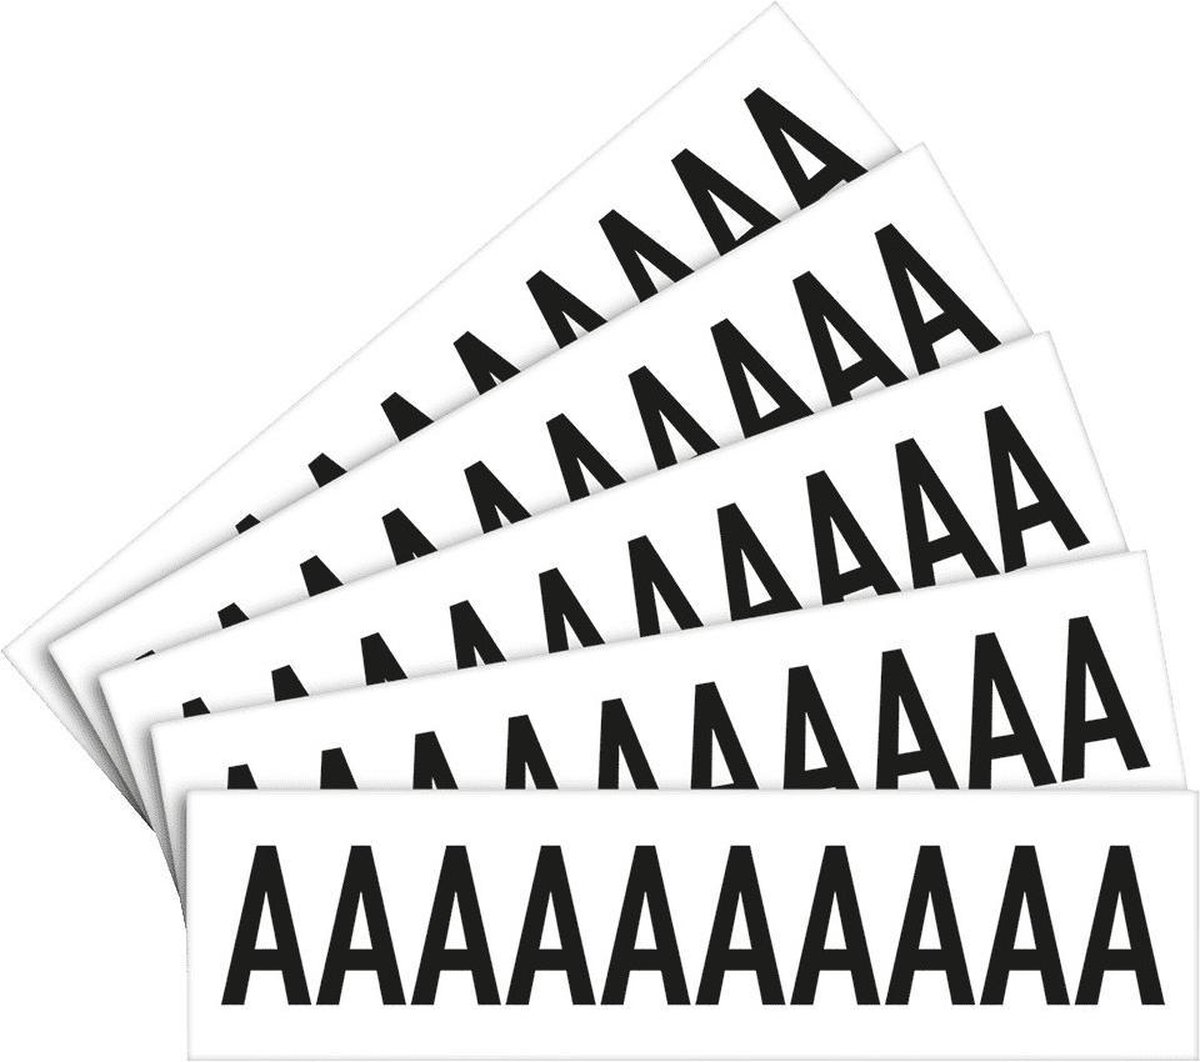 Afbeelding van product Merkloos / Sans marque  Letter stickers wit/zwart teksthoogte: 25 mm, per kaart letter B